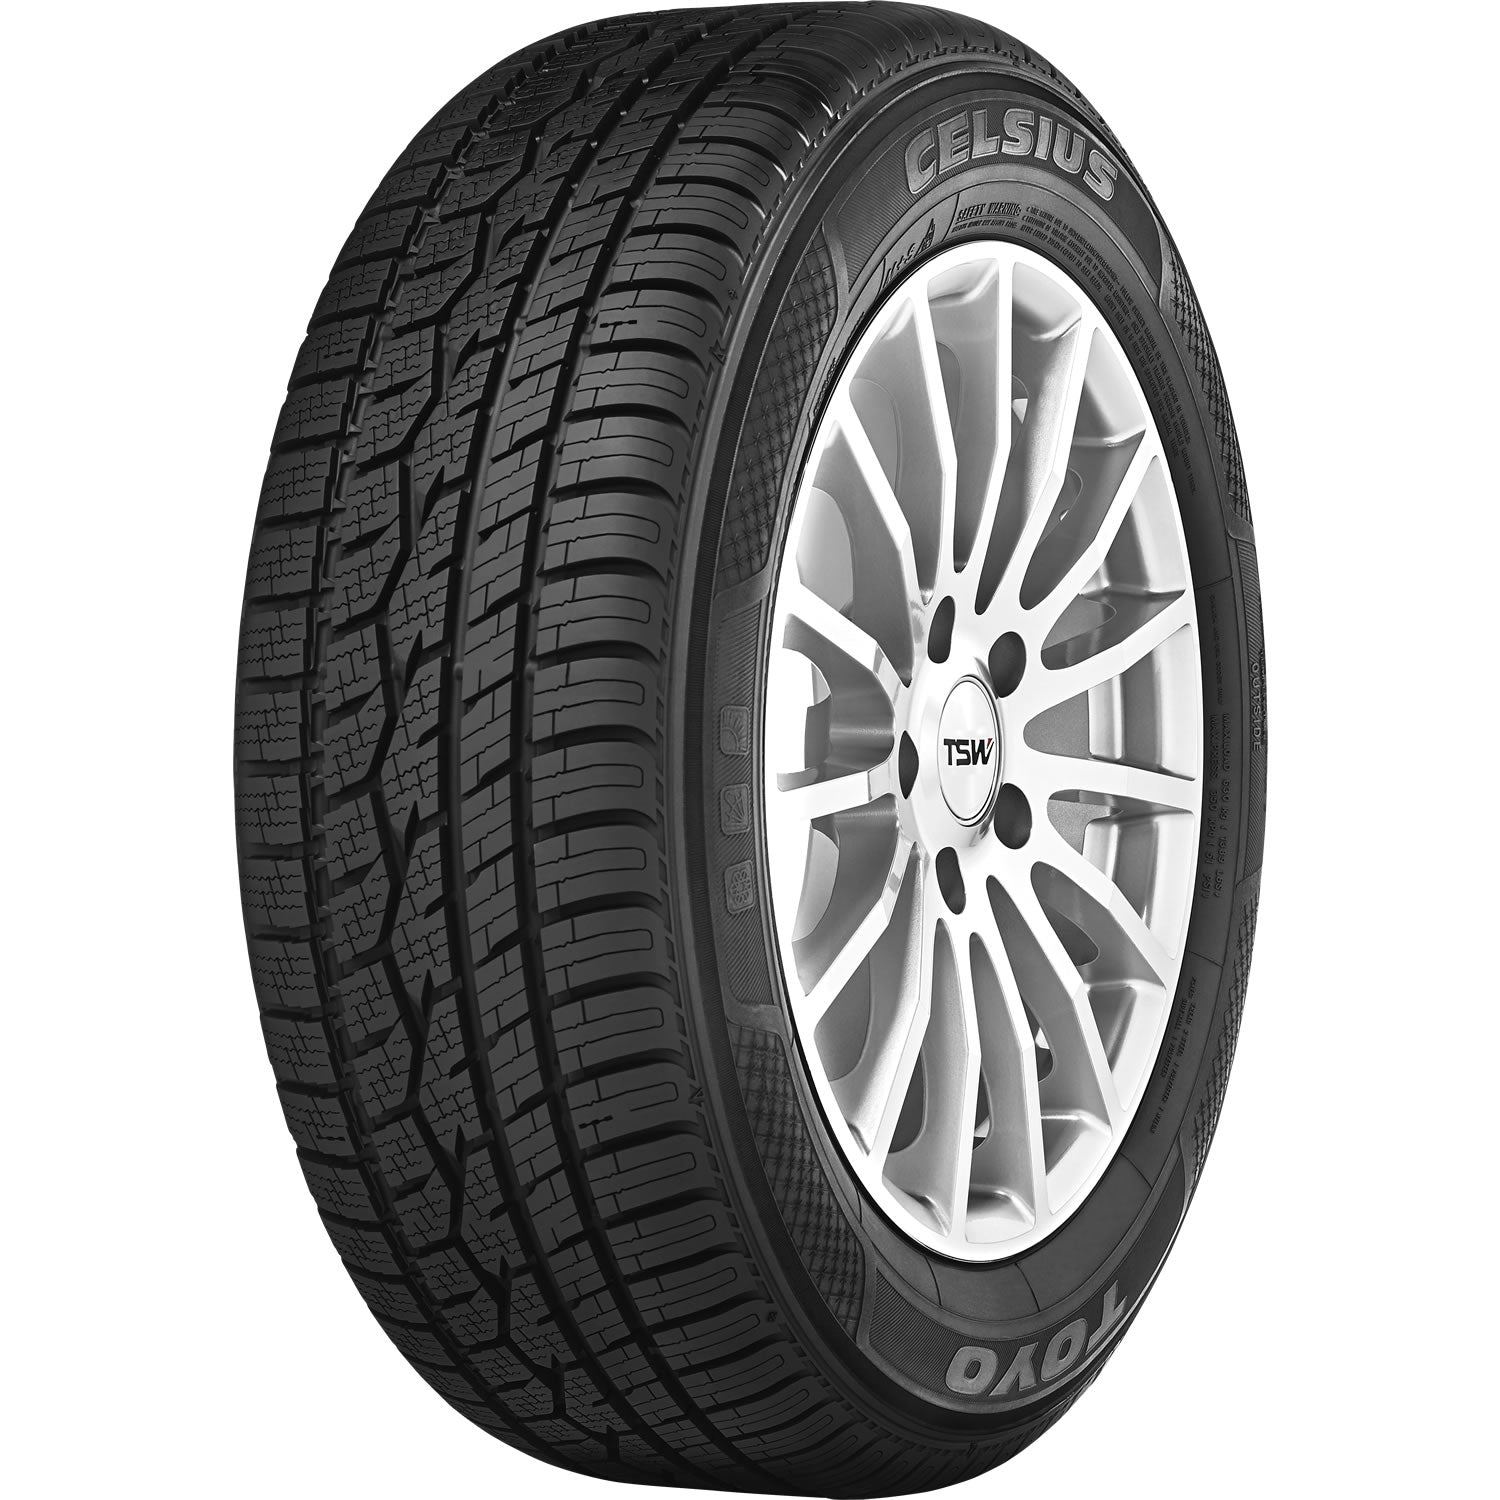 TOYO TIRES CELSIUS 215/55R16XL (25.3X8.5R 16) Tires